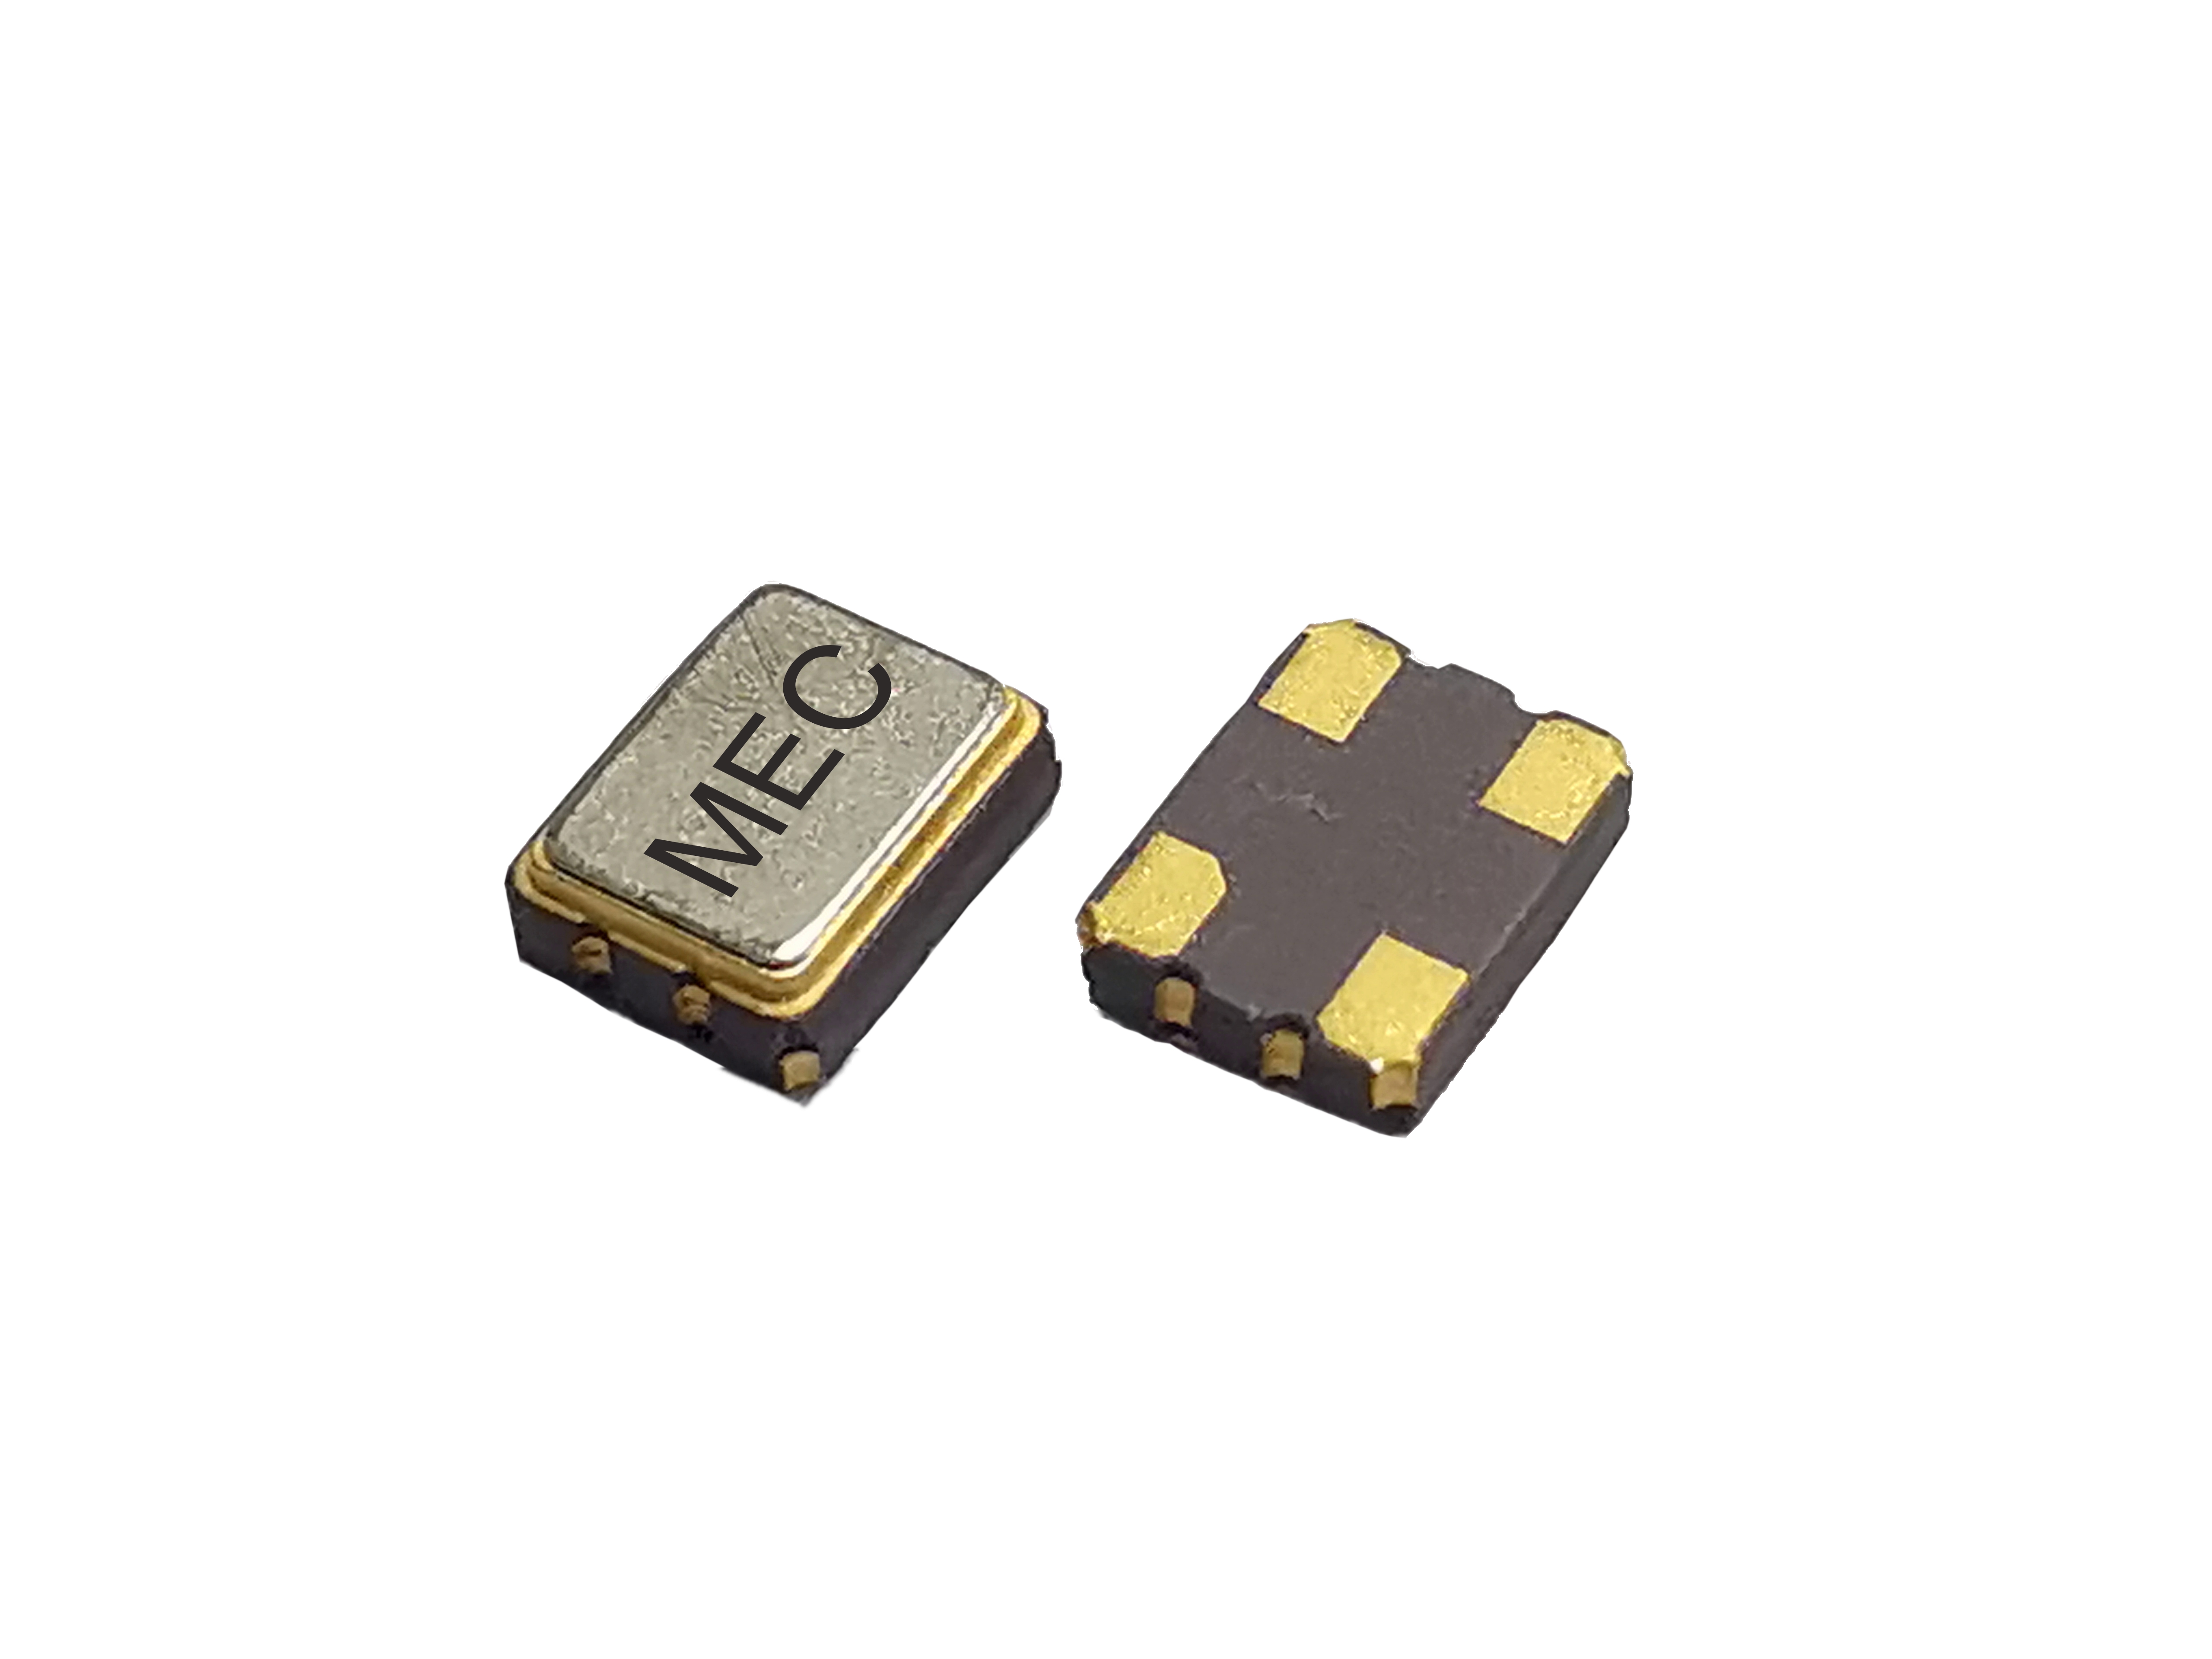 HA32 3225 3.3V 32.768KHz uA Low Current Consumption CMOS SMD Crystal Oscillator